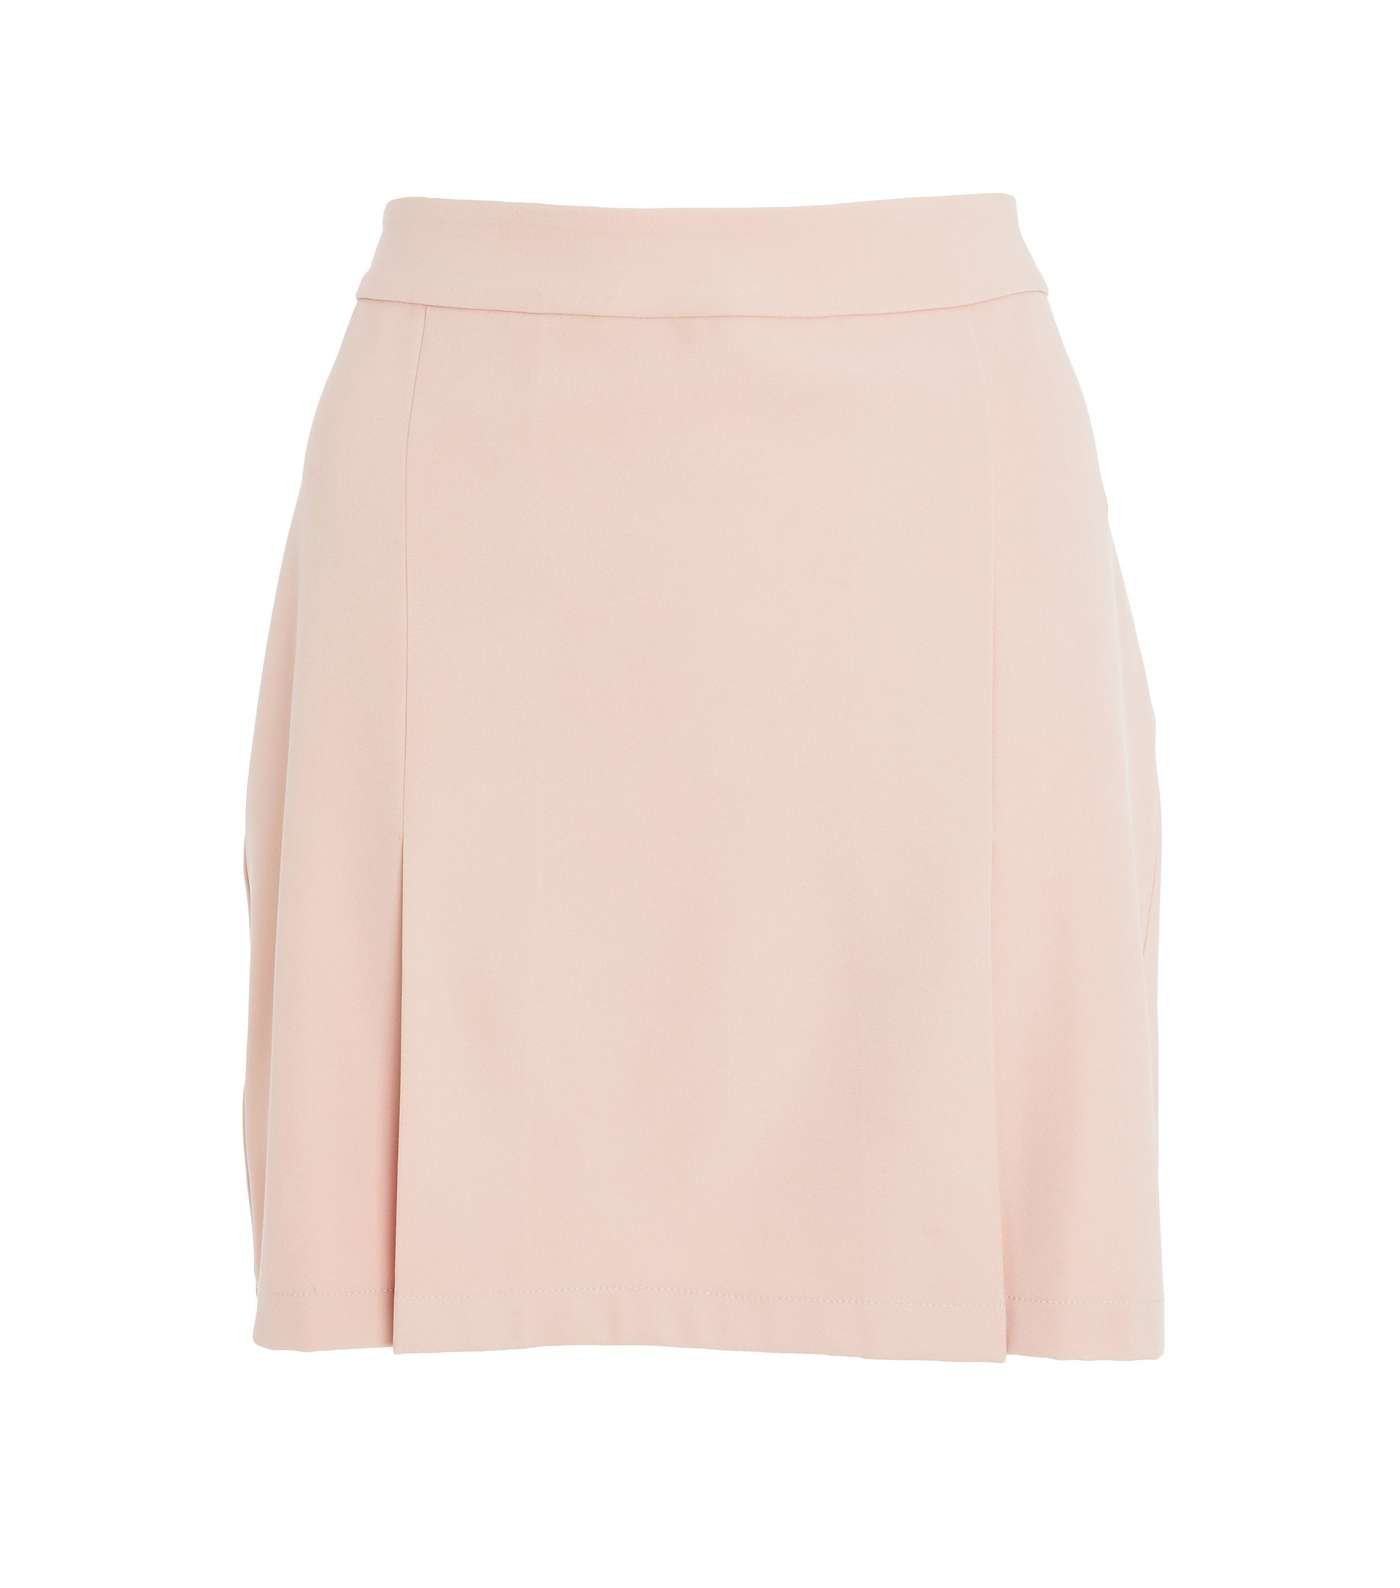 QUIZ Pink High Waist Mini Skirt Image 4